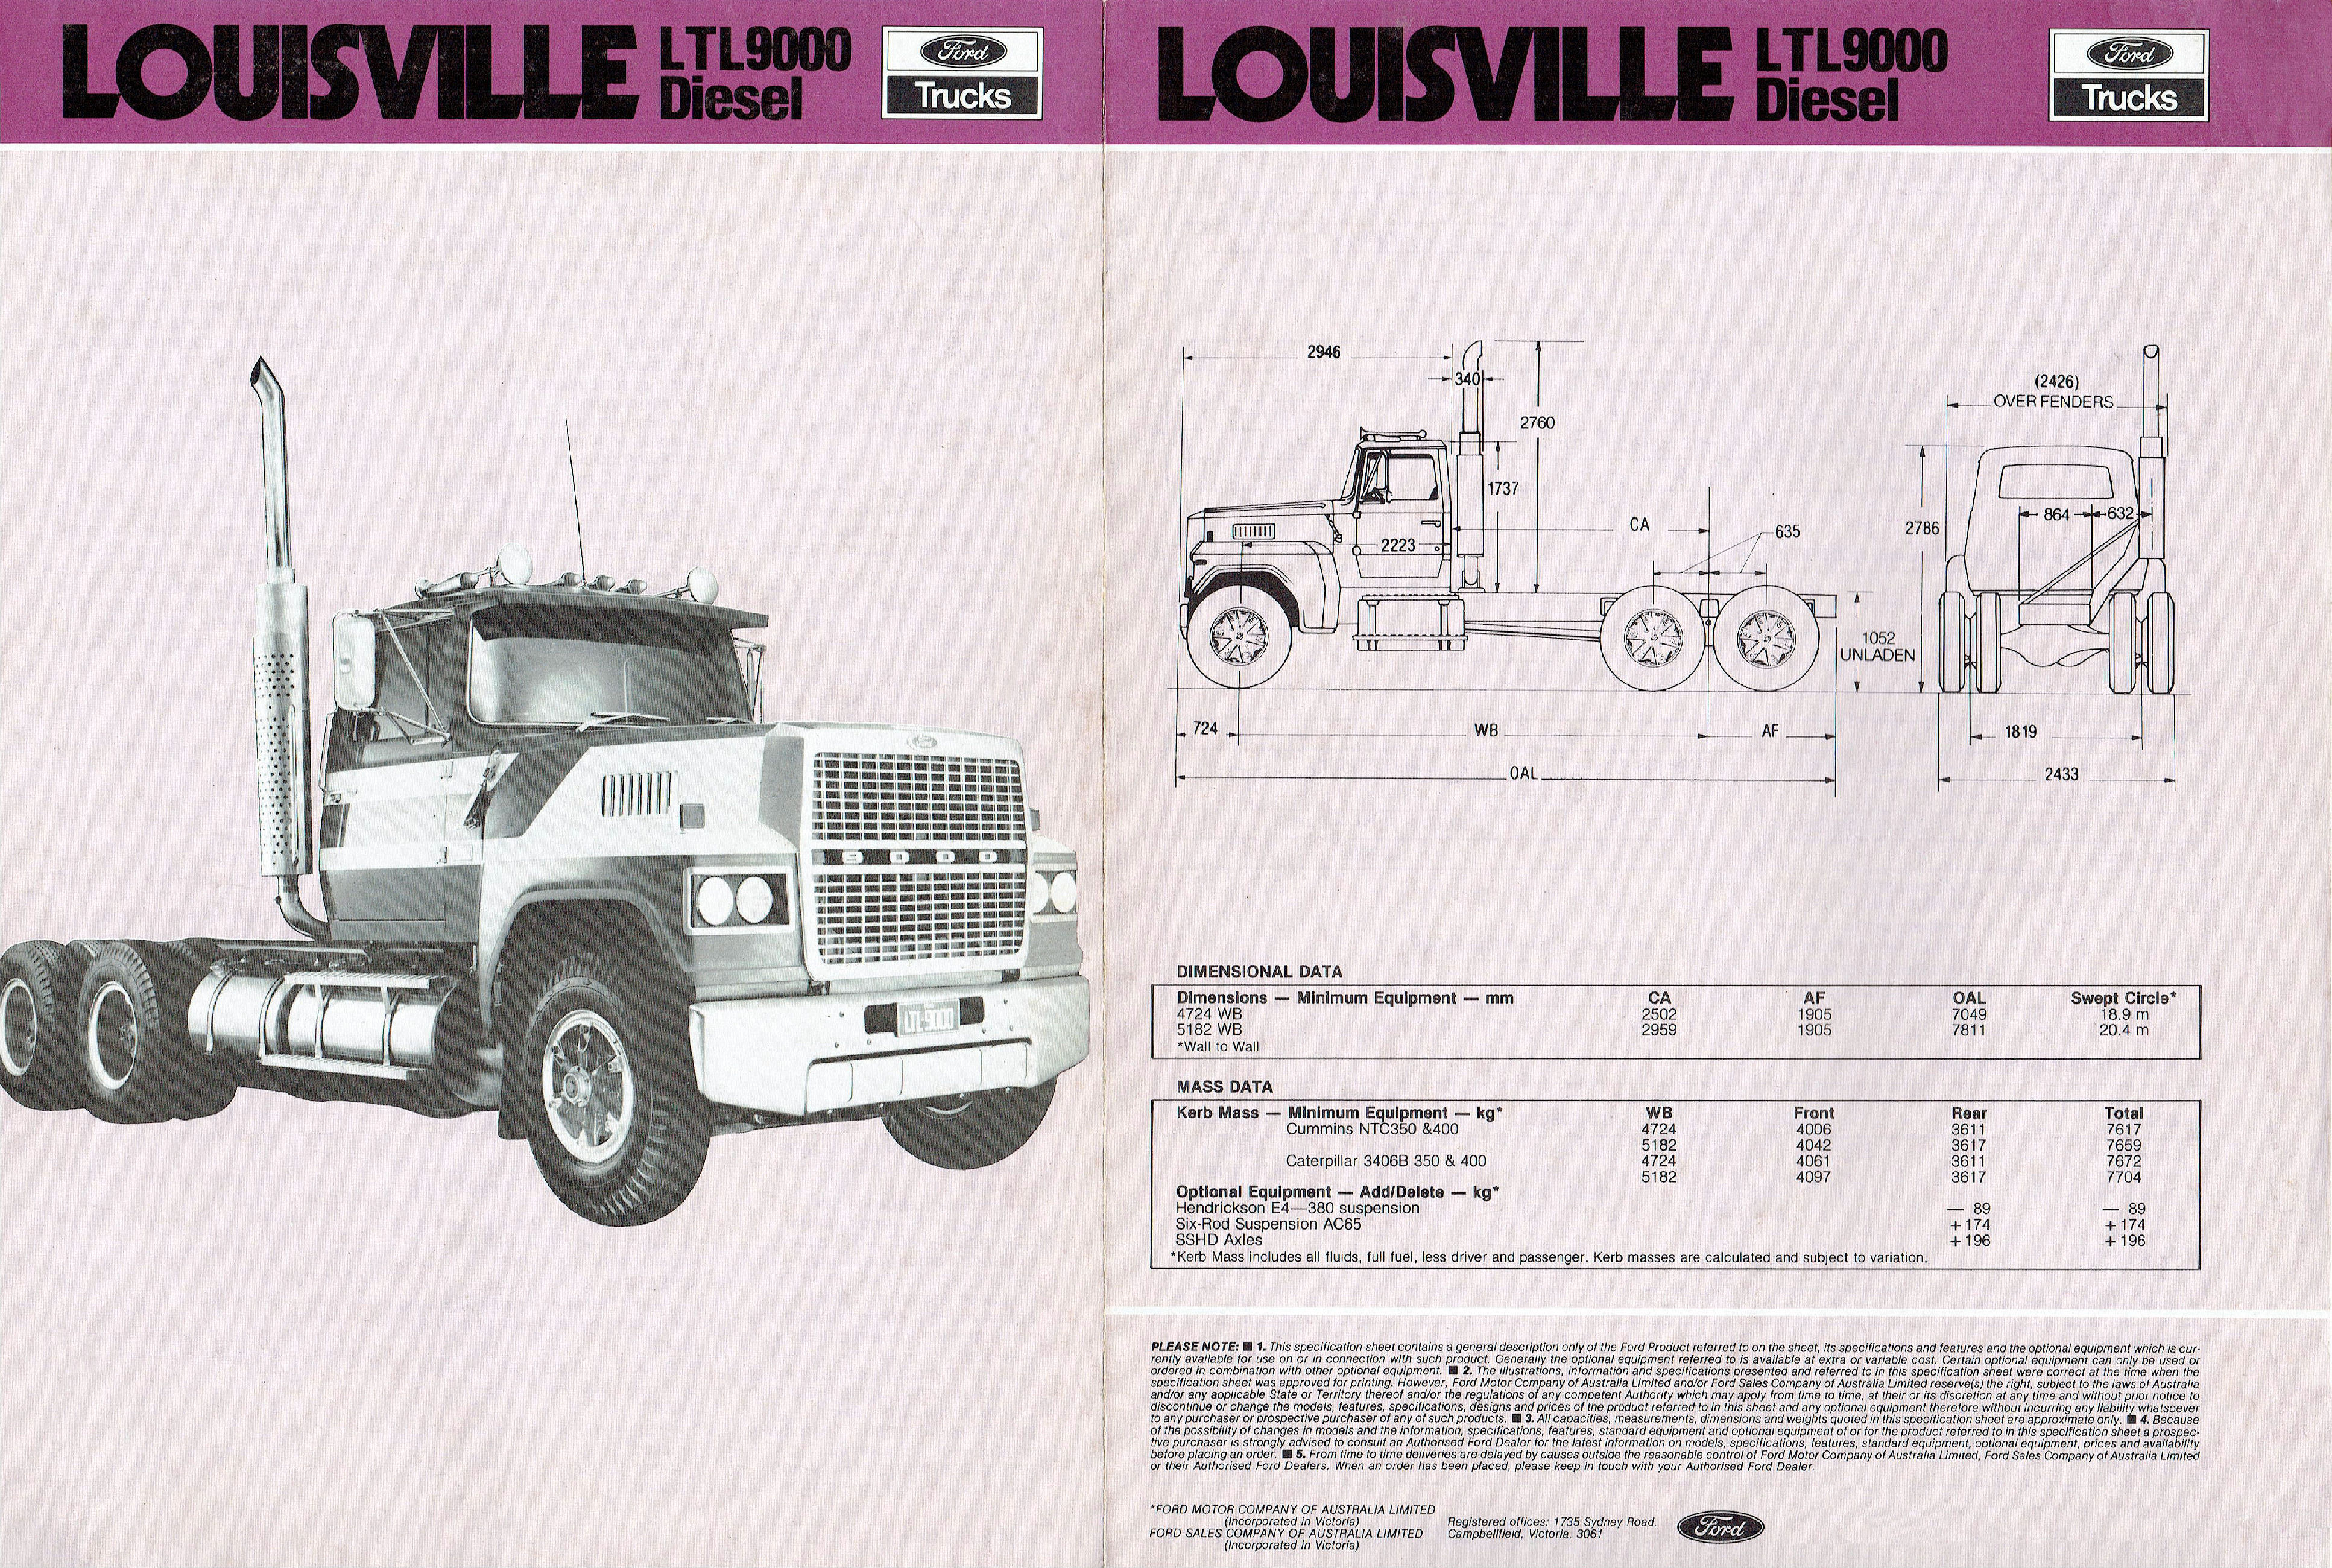 1983 Ford Louisville LTL9000 Diesel (Aus)-Side A.jpg-2022-12-7 13.47.30